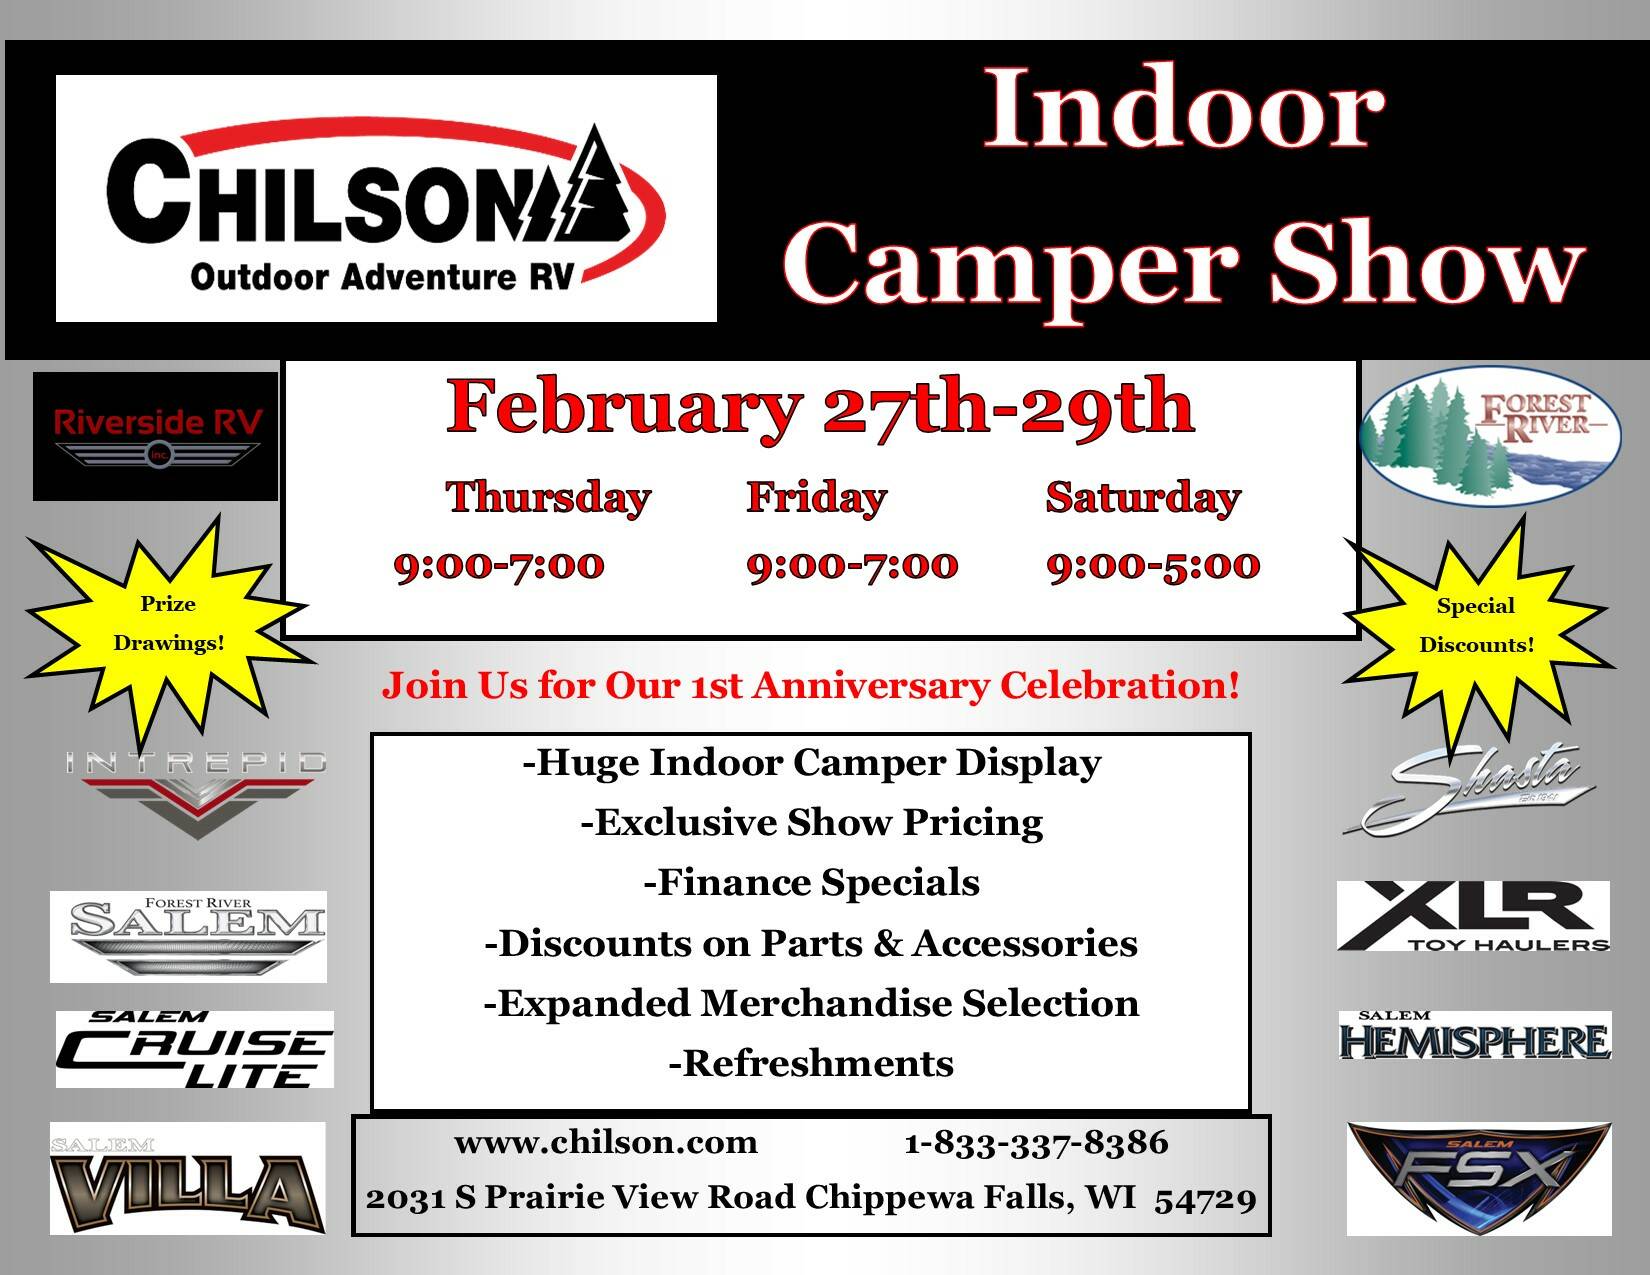 Indoor Camper Show Chilson Outdoor Adventure RV